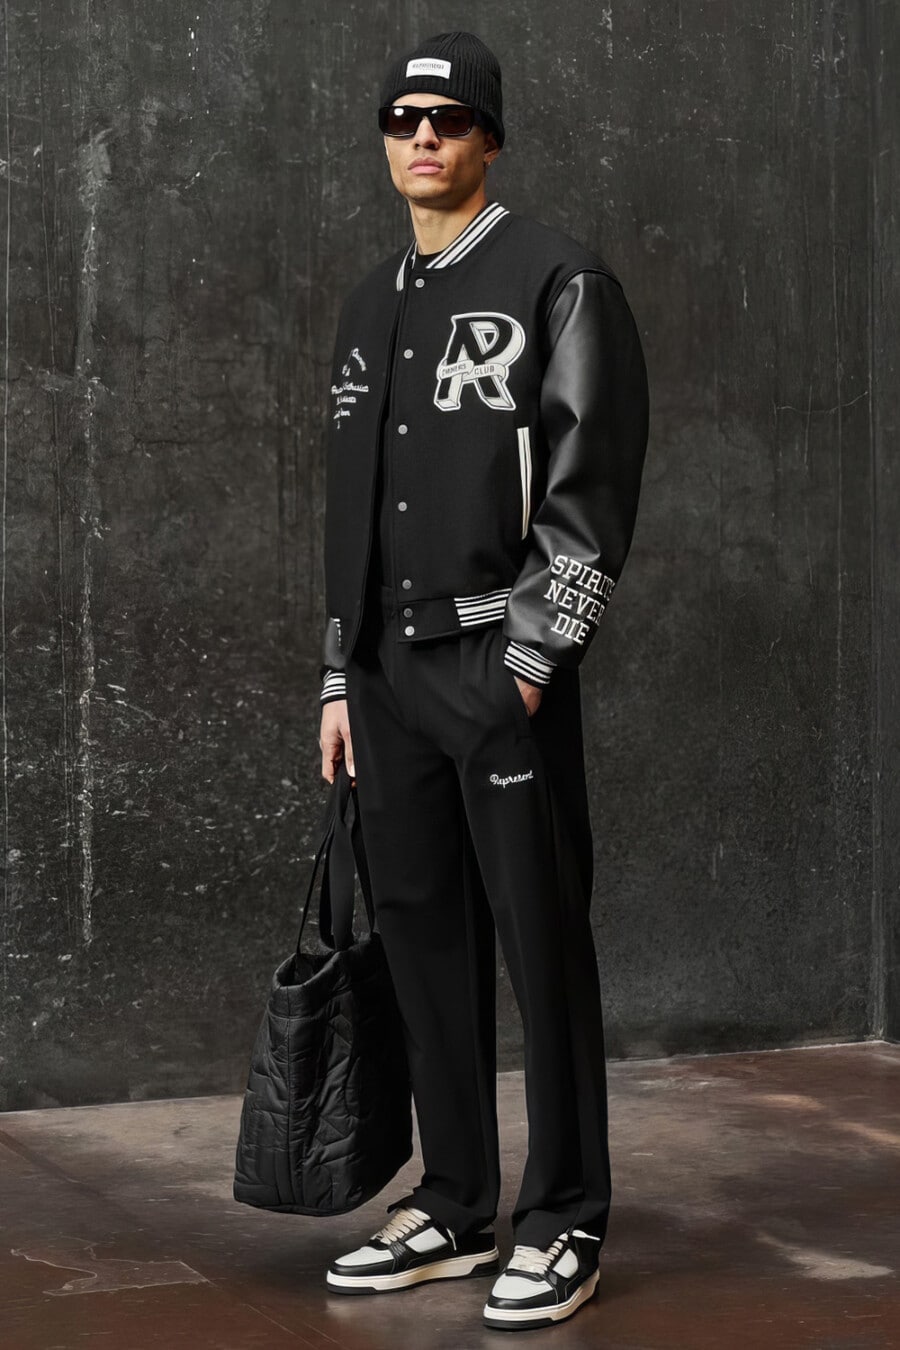 Men's loose black pants, black varsity jacket, black & white chunky sneakers, black sunglasses, black beanie and black tote bag outfit